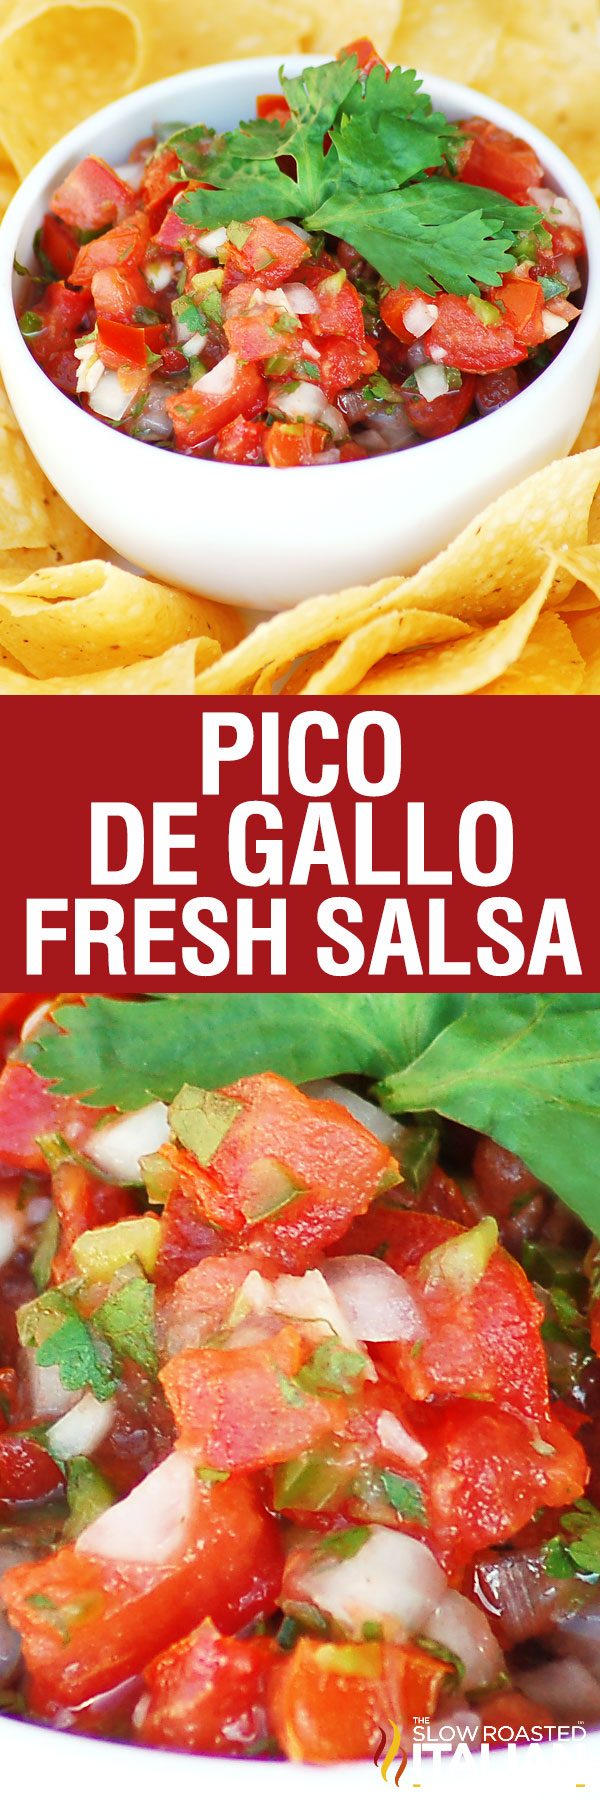 pico-de-gallo-fresh-salsa-pin-5607046